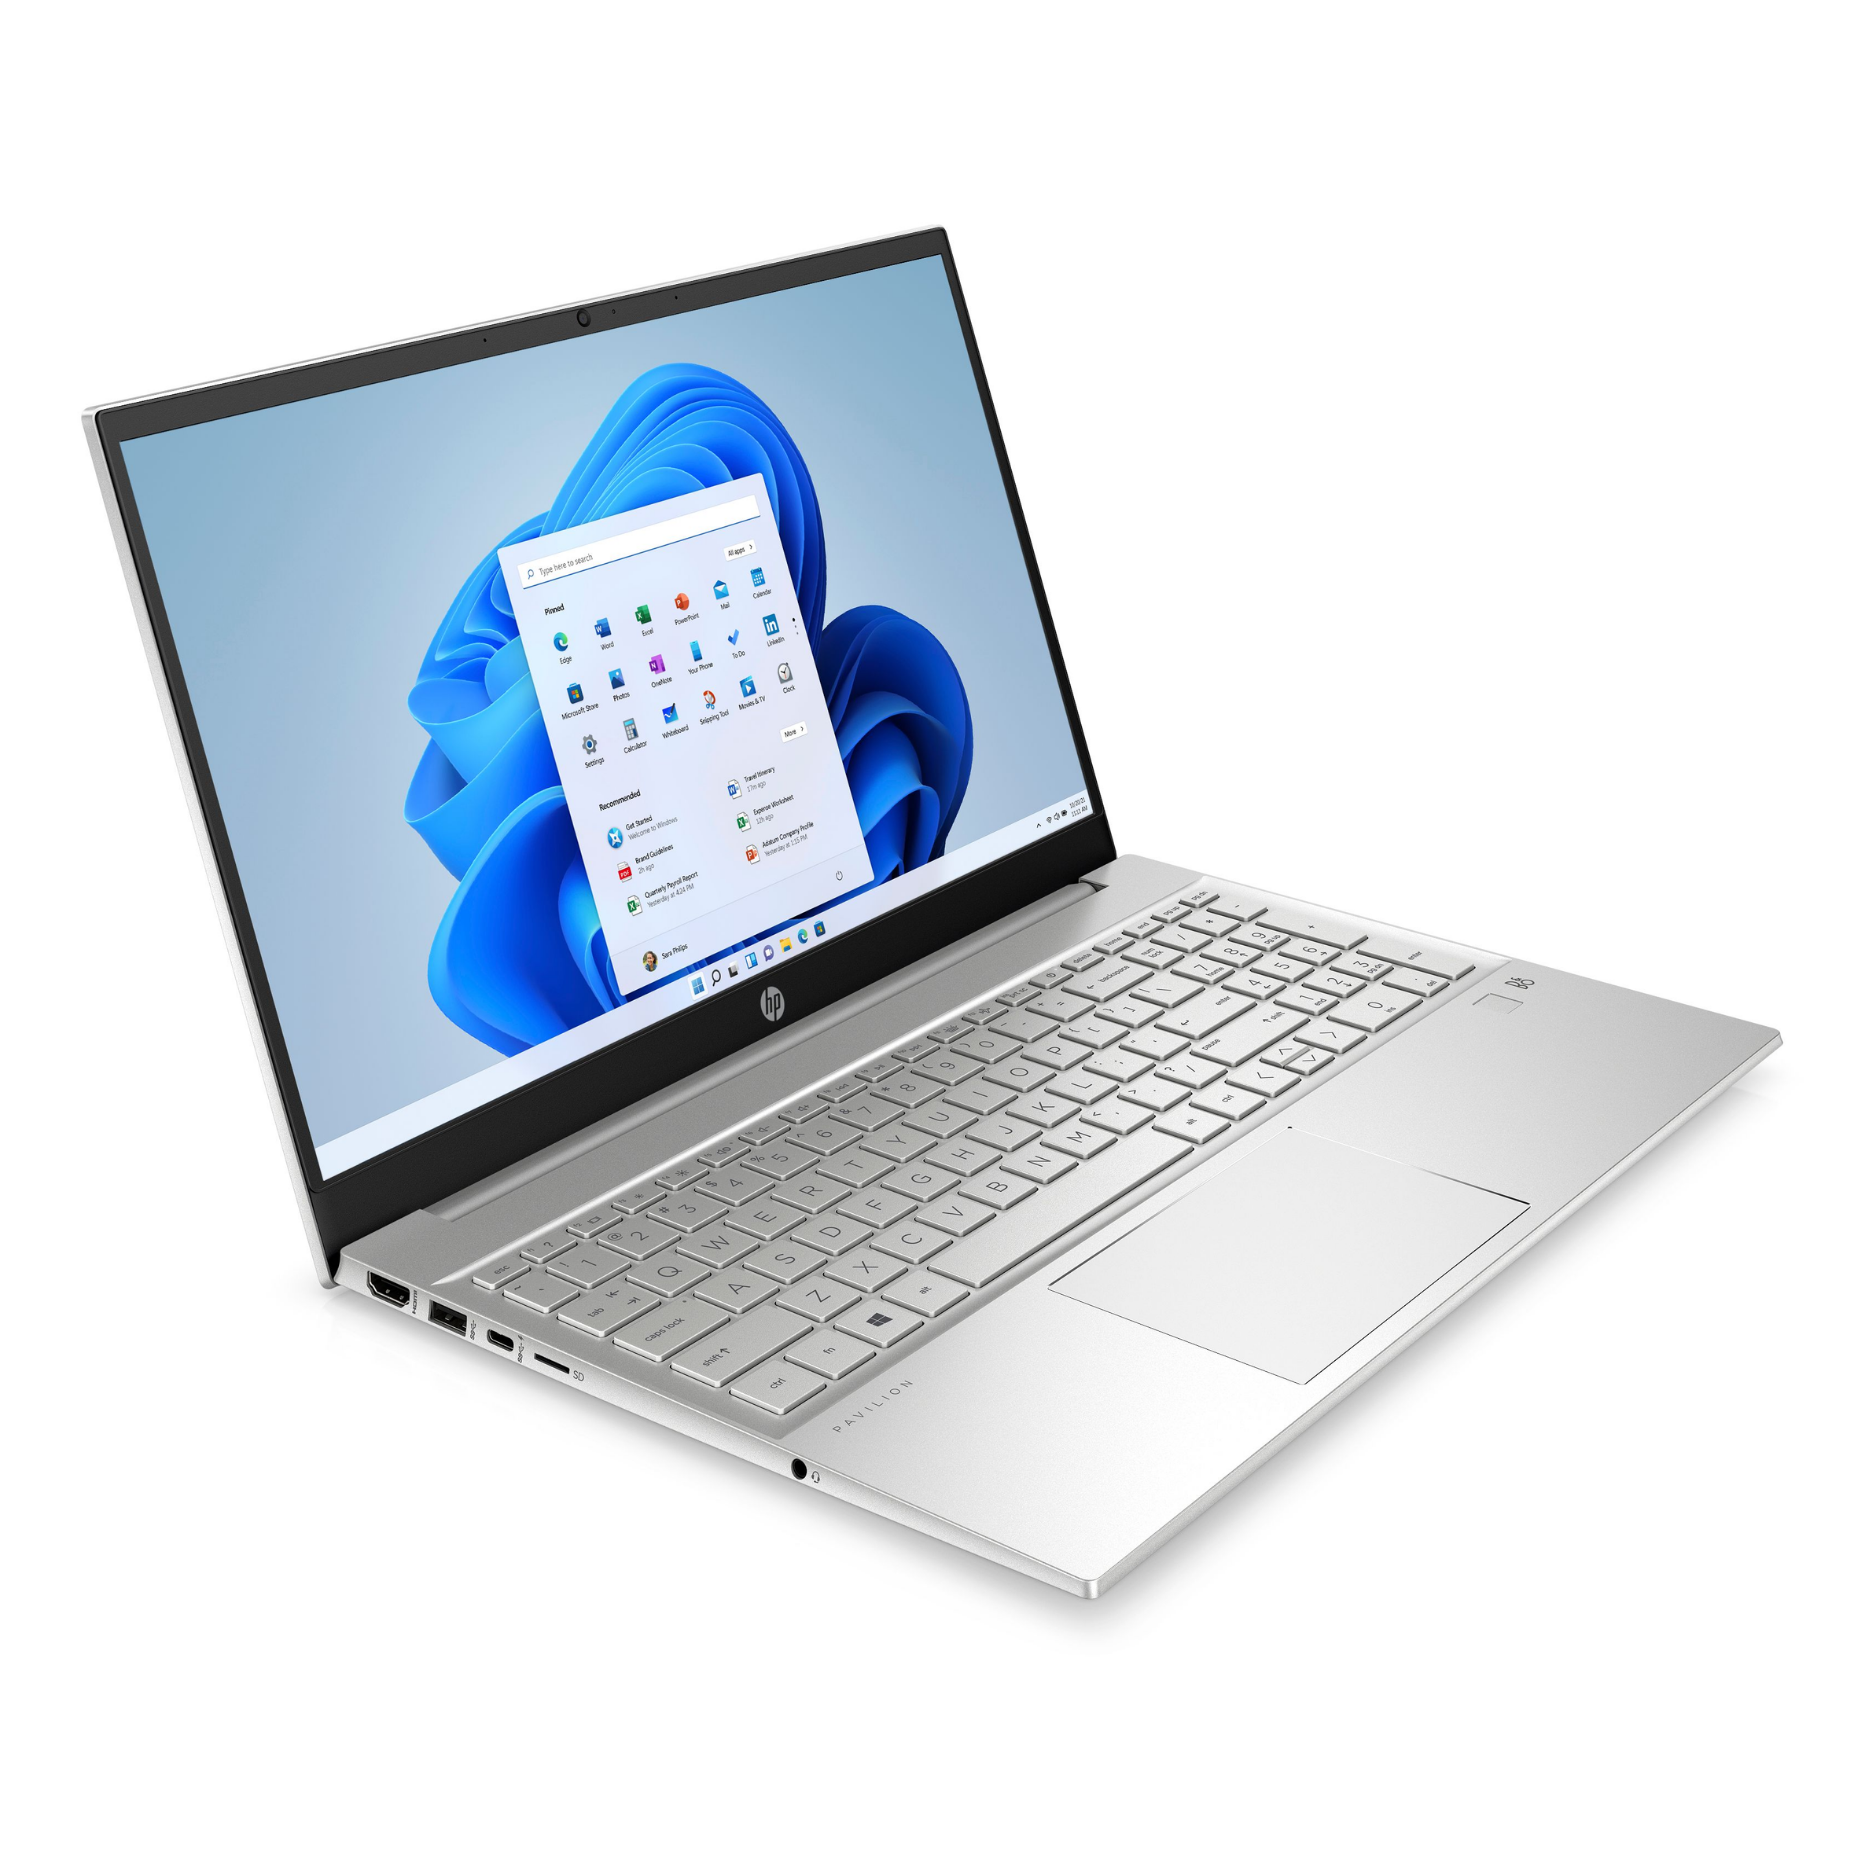 Laptop HP Pavilion 15-eg0501la Core i5-1135G7 8GB, SSD 512GB, 15.6", Windows 11 + Audífono y MousePad HyperX (6R3R7LA)